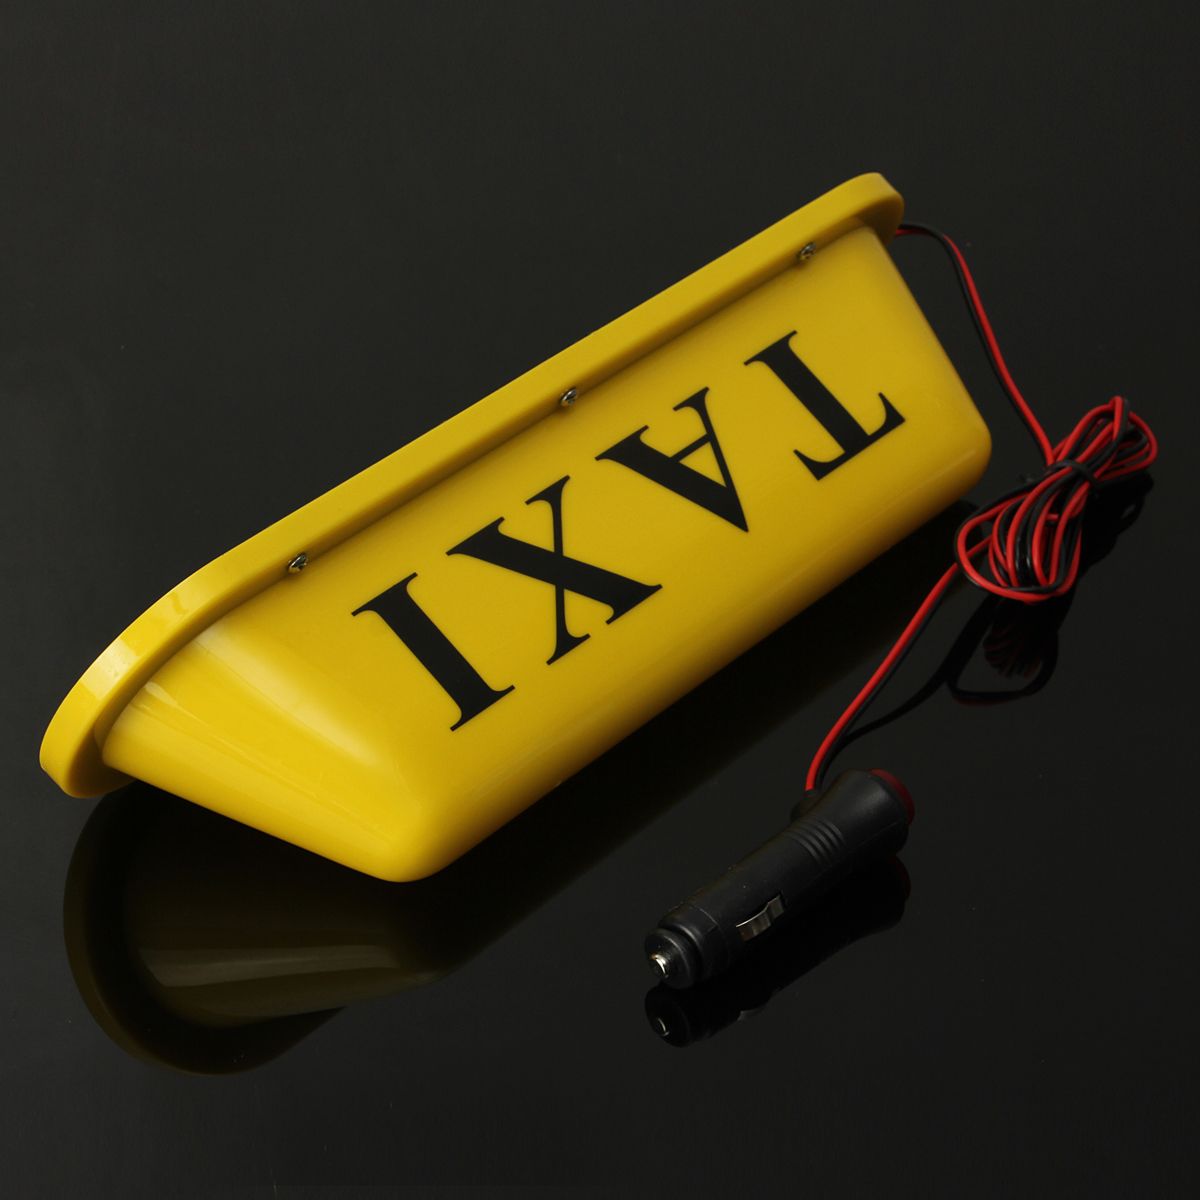 Waterproof-12V-Taxi-Car-Roof-Top-Cab-LED-Sign-Light-Lamp-Magnetic-Base-with-Car-Lighter-Plug-1001645